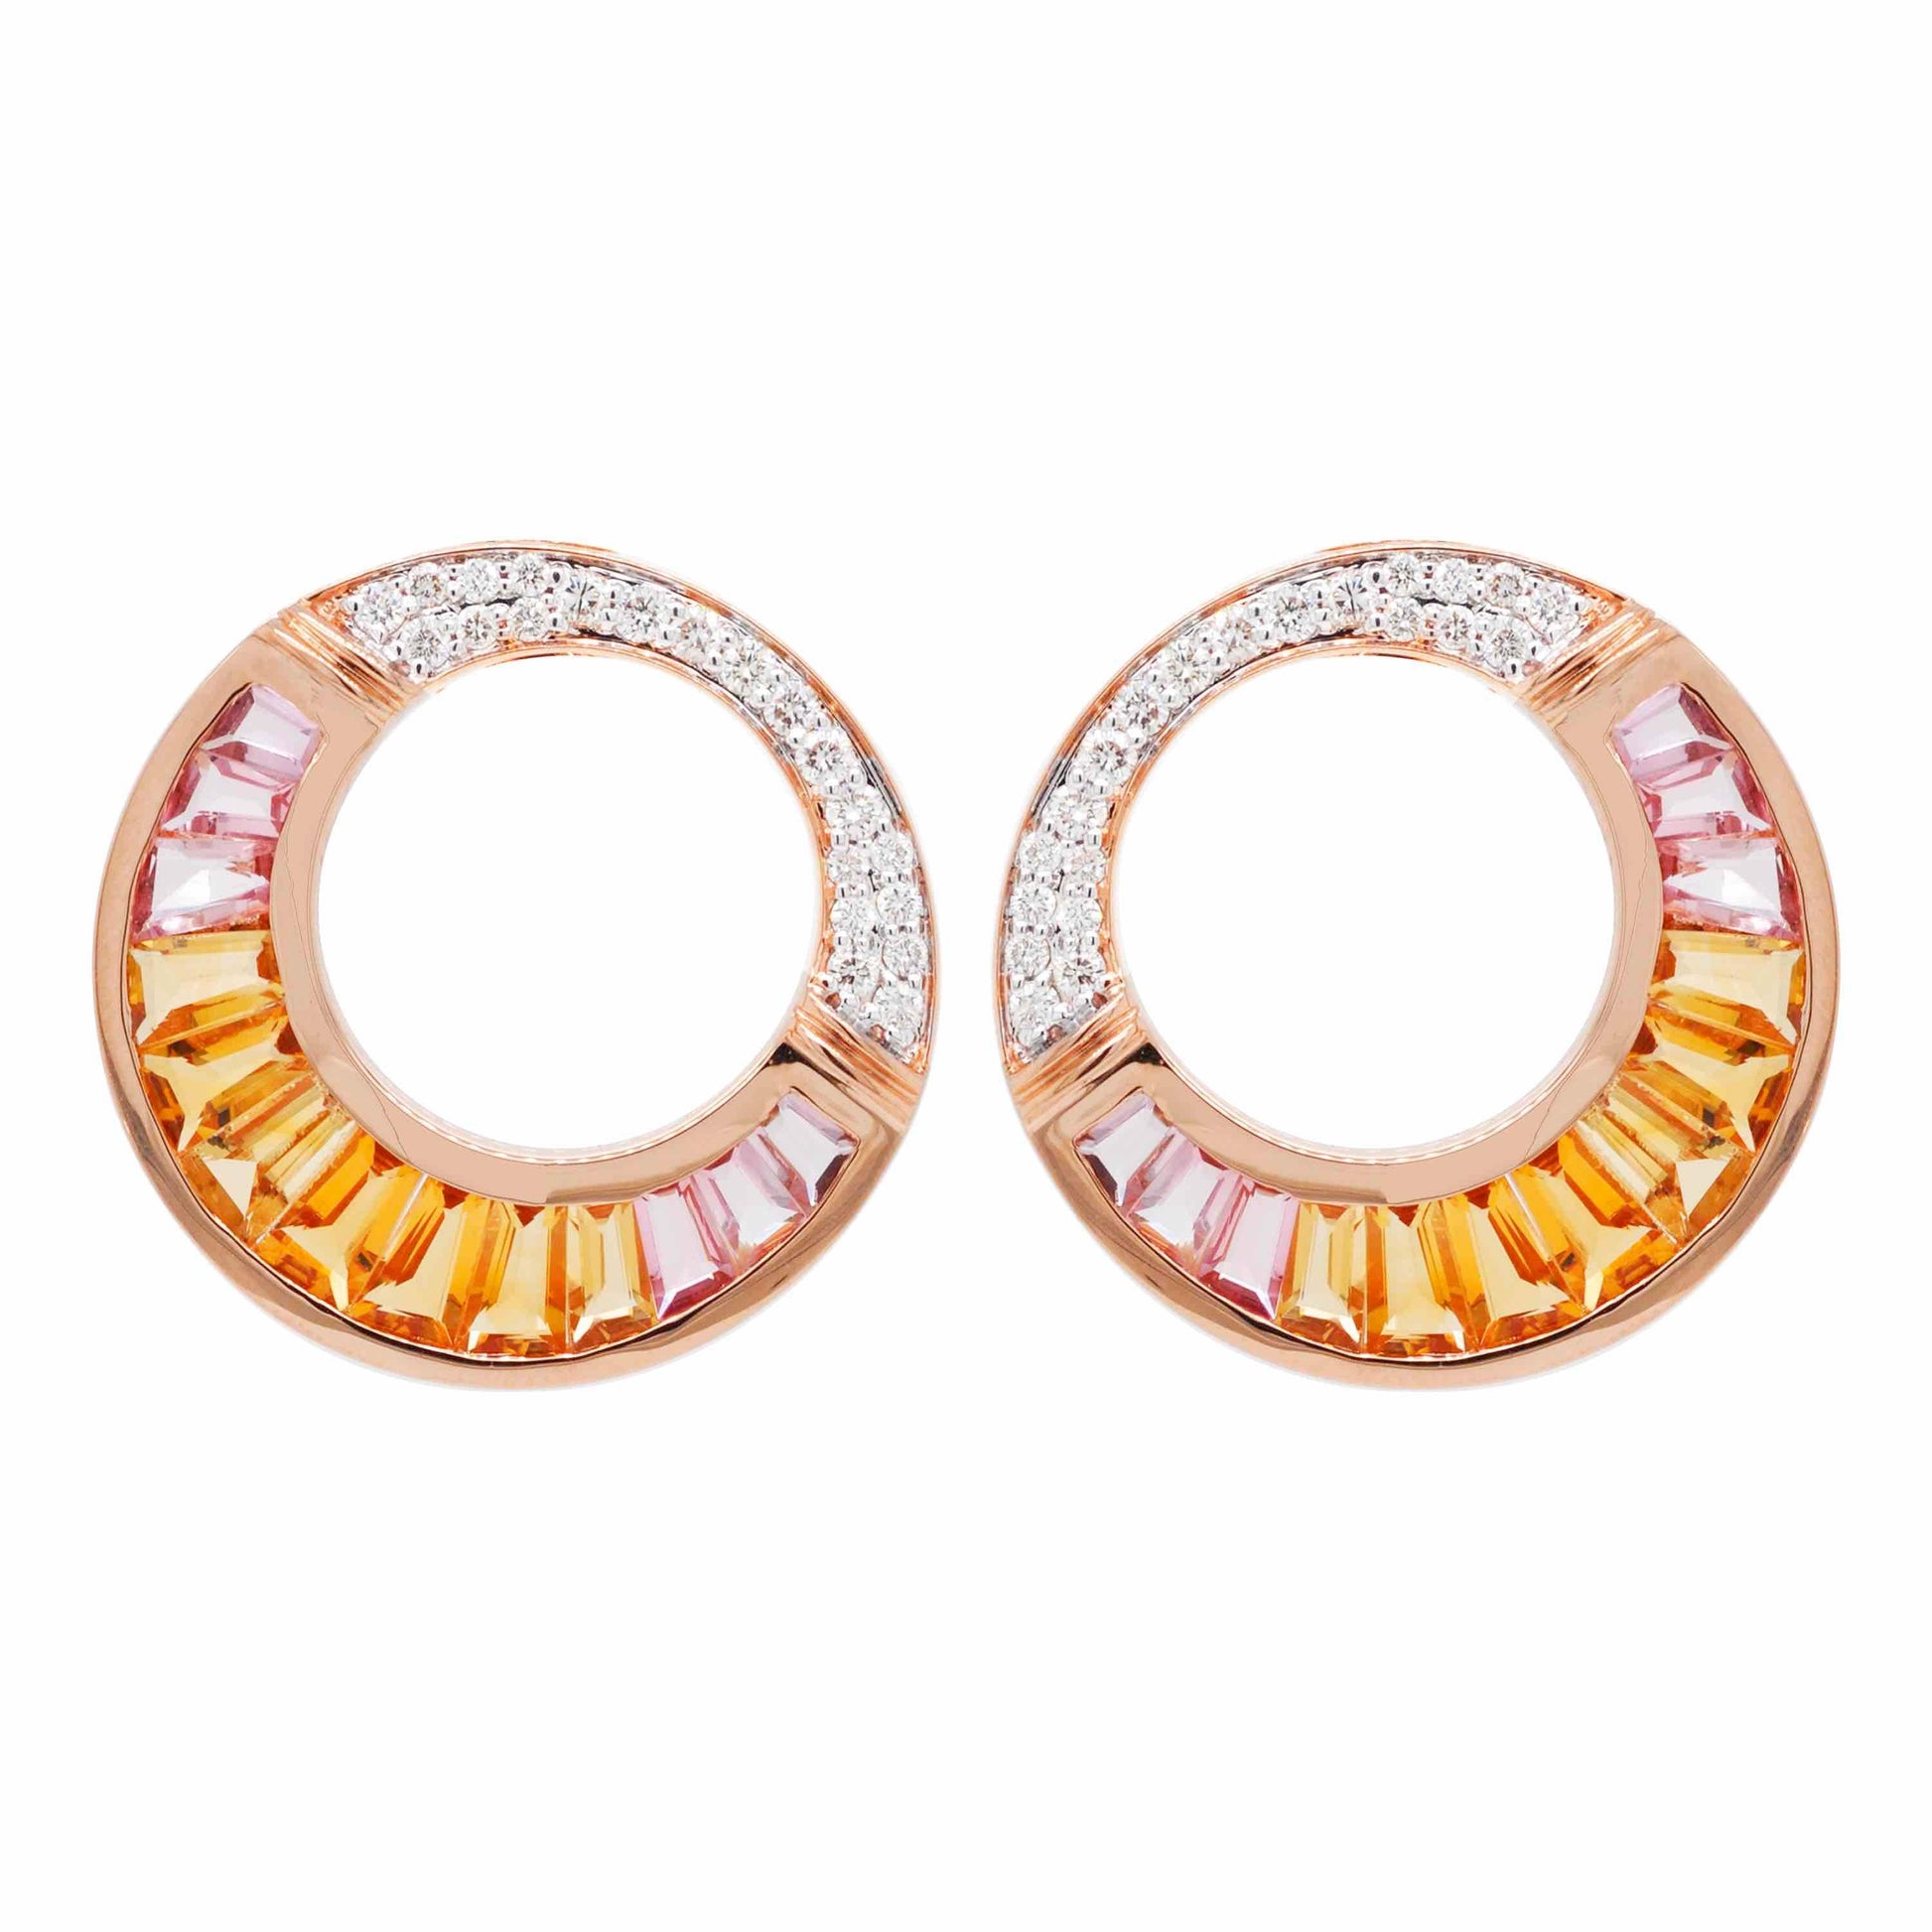 Diamond Cleopatra earrings